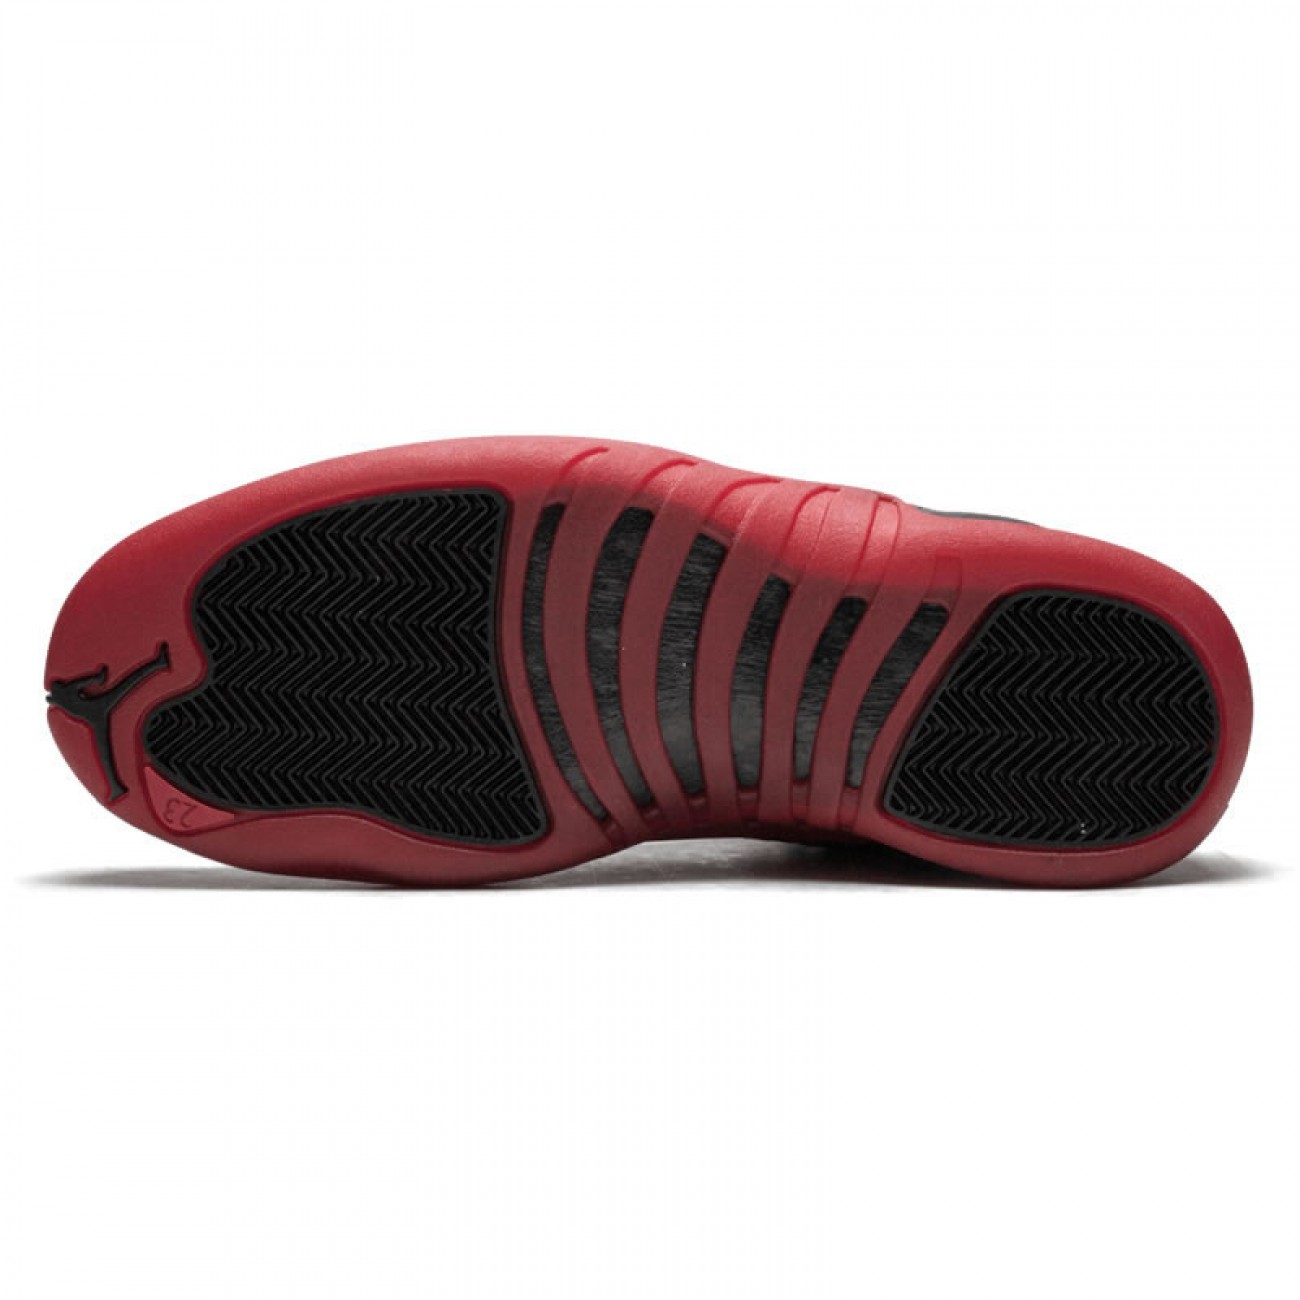 Air Jordan 12 Retro "Flu Game" Red And Black 12s For Sale 130690-002 